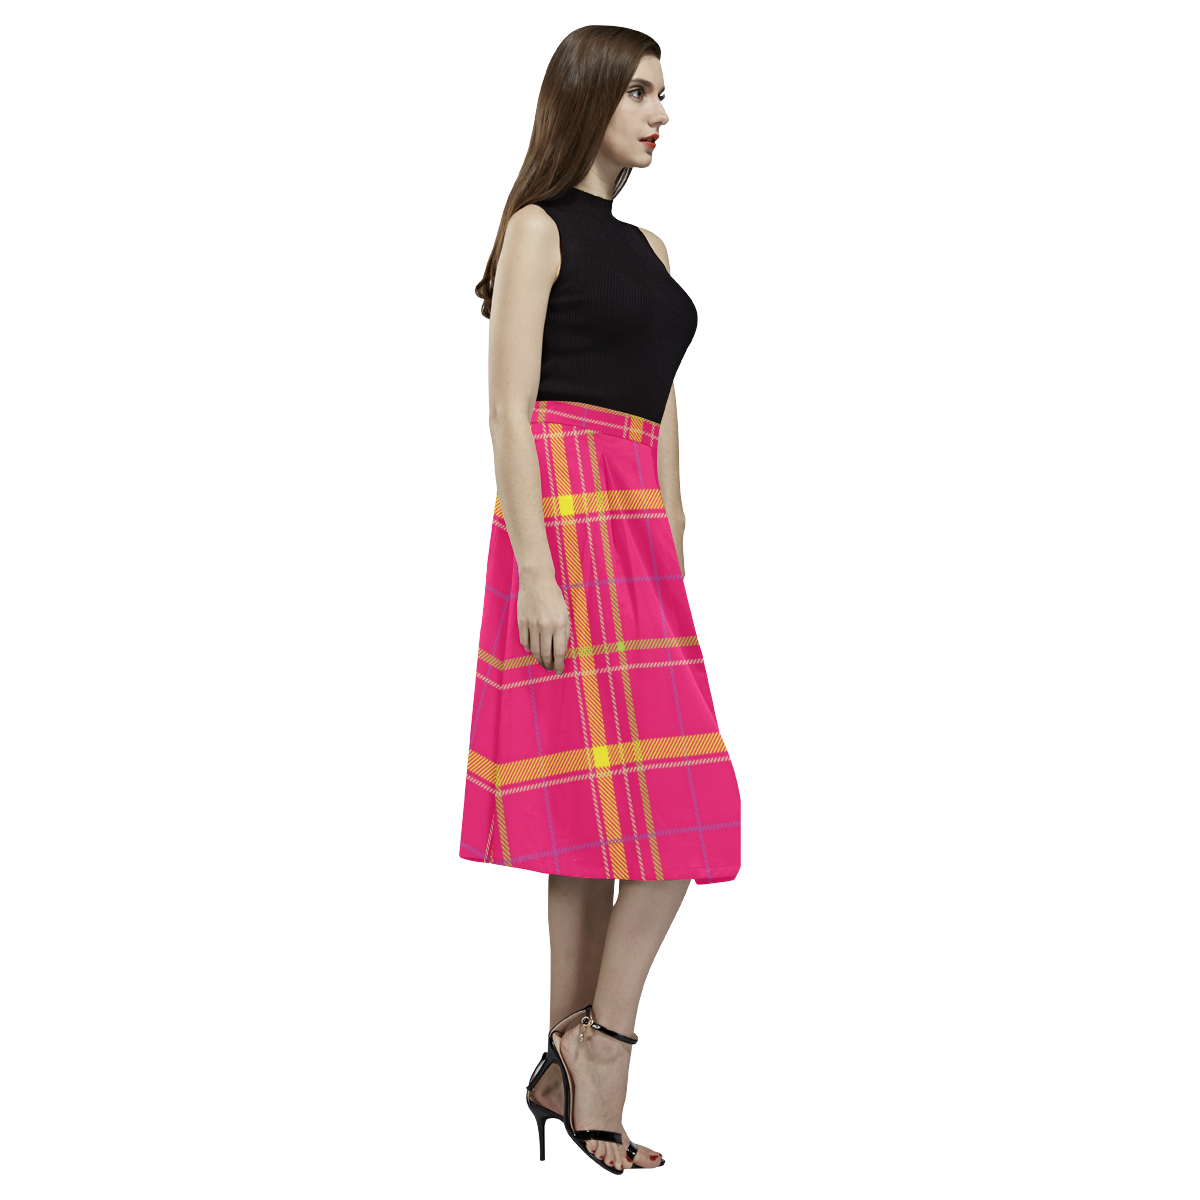 PLAID IN PINK Aoede Crepe Skirt (Model D16)